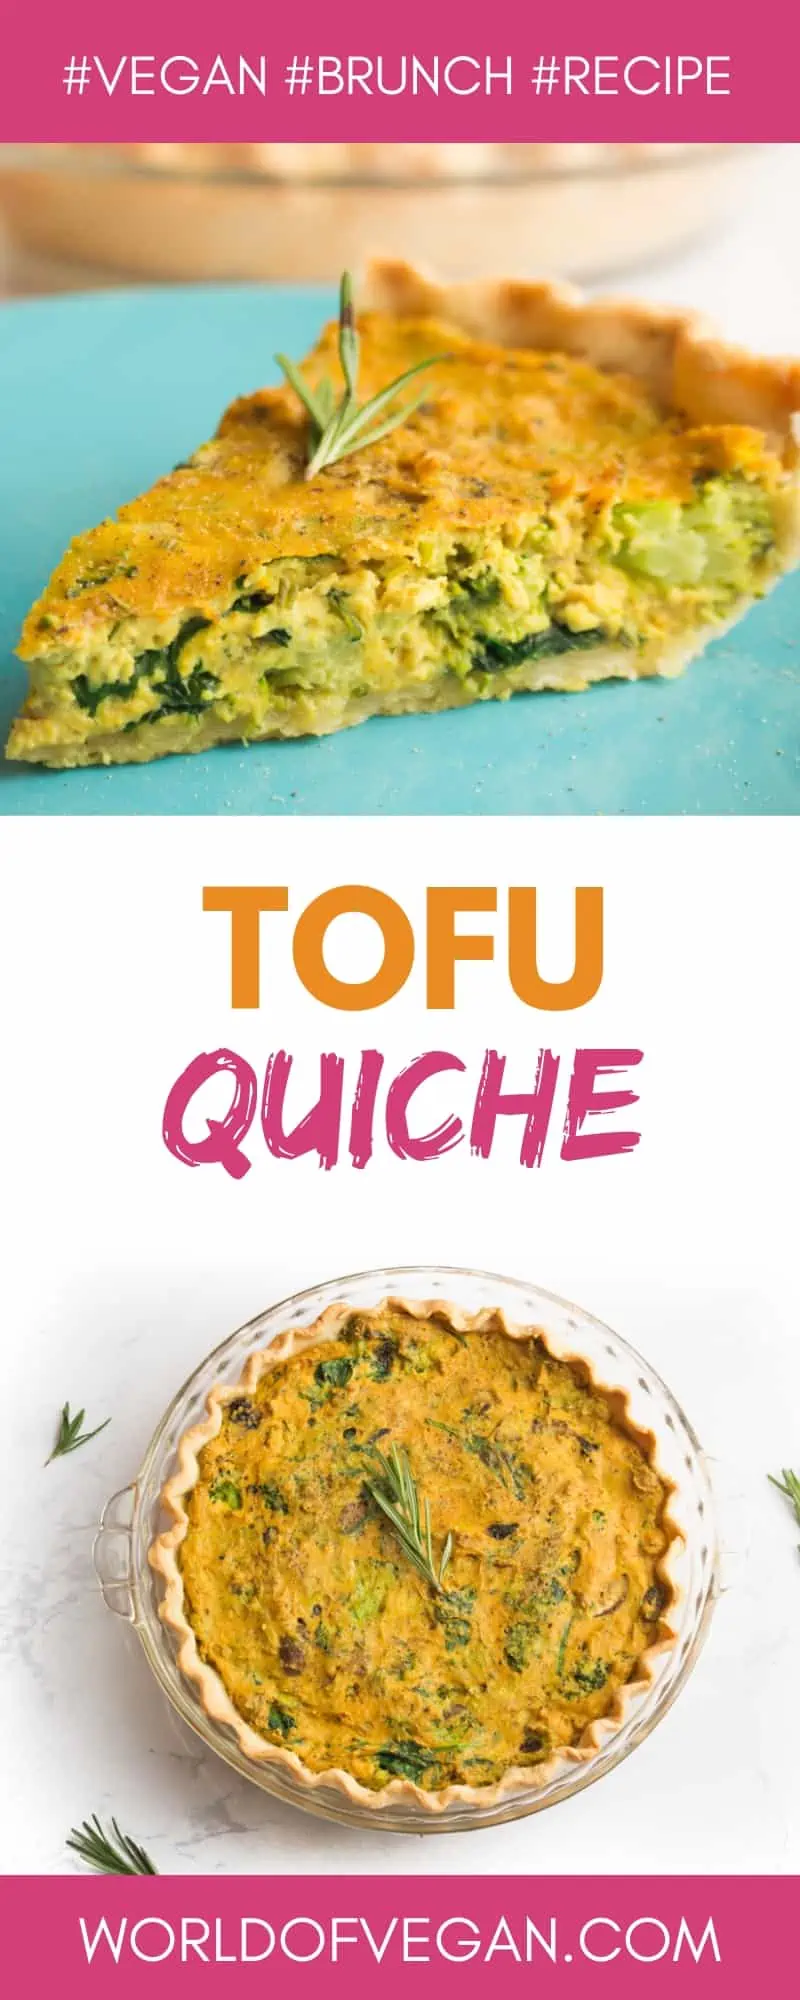 Tofu Quiche | Delicious Plant-Based Brunch Recipe | WorldOfVegan.com | #vegan #brunch #tofu #recipe #breakfast #quiche